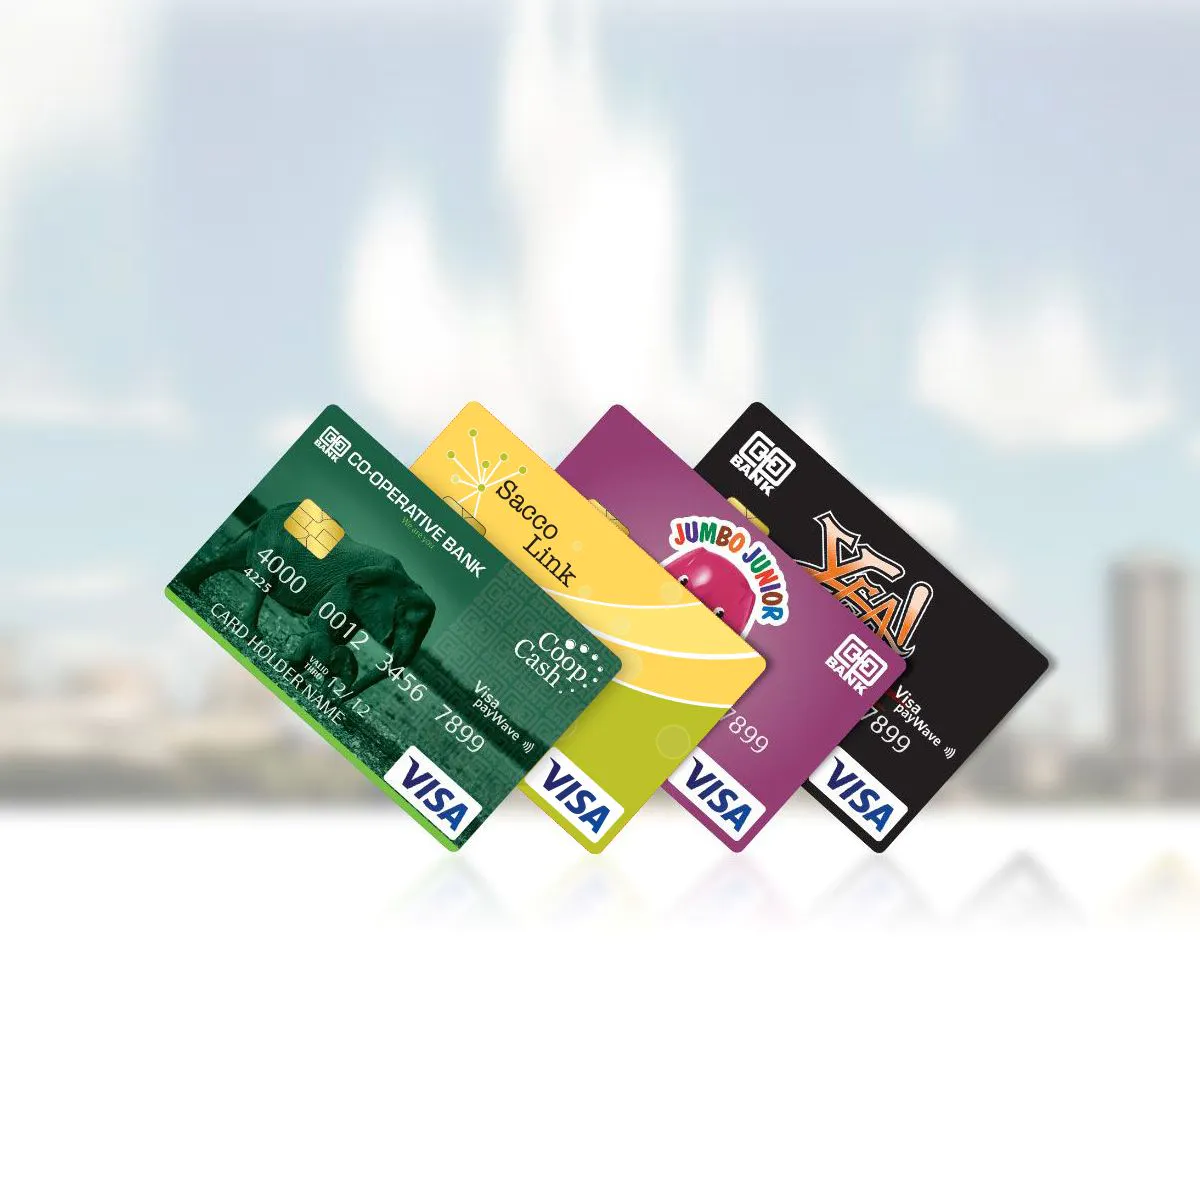 Debit Cards (ATM Cards)